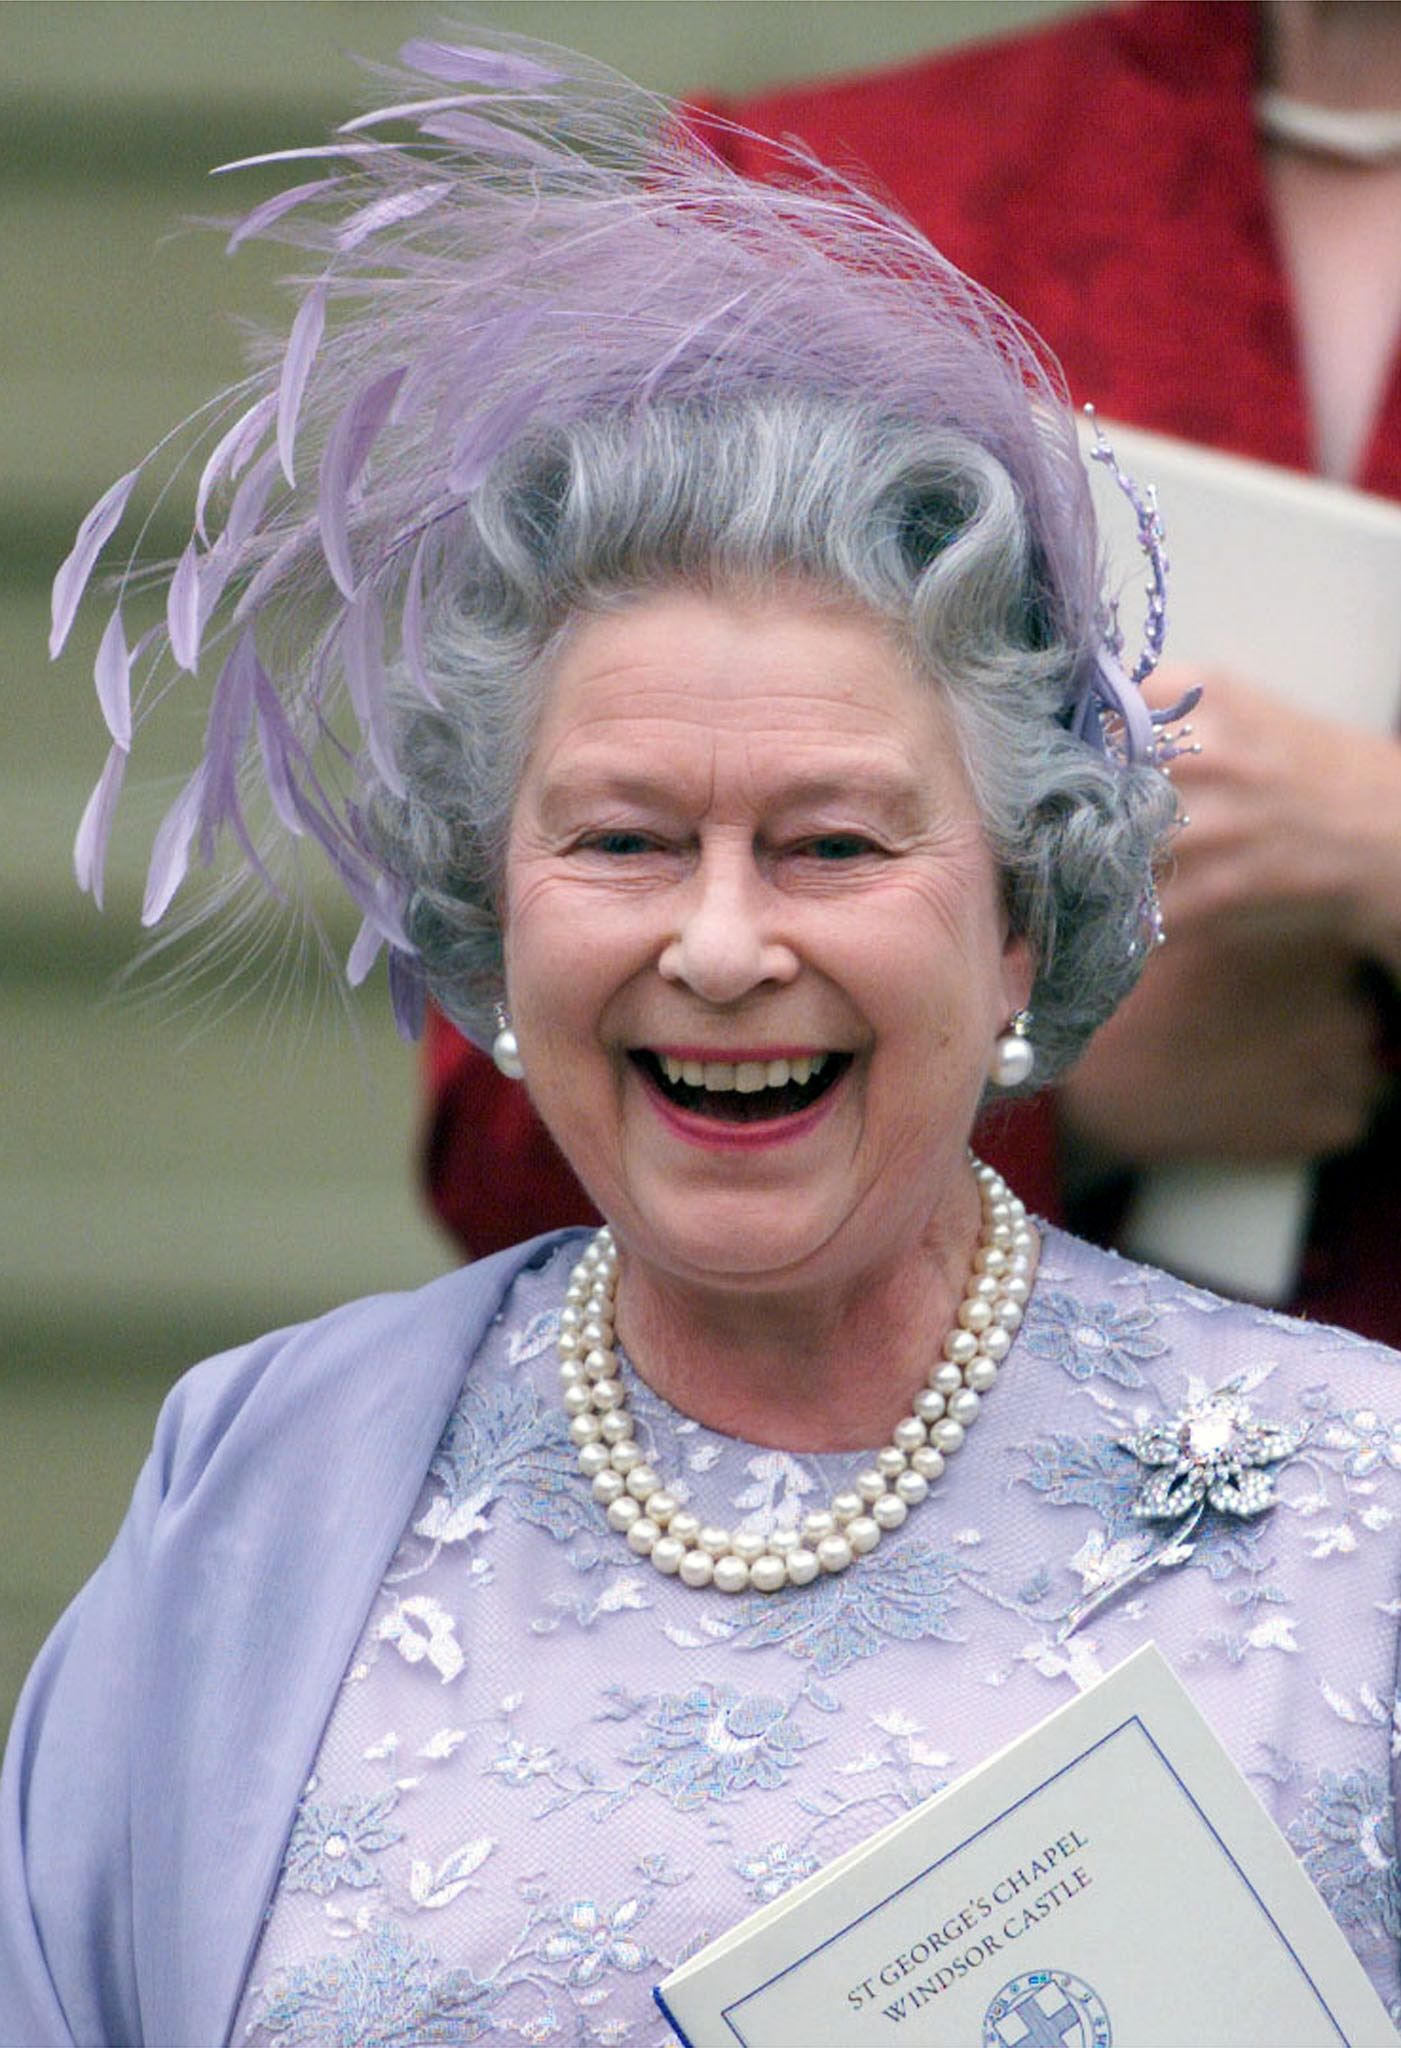 30+ Best Royal Wedding Hats - British Royal Wedding Hats Through